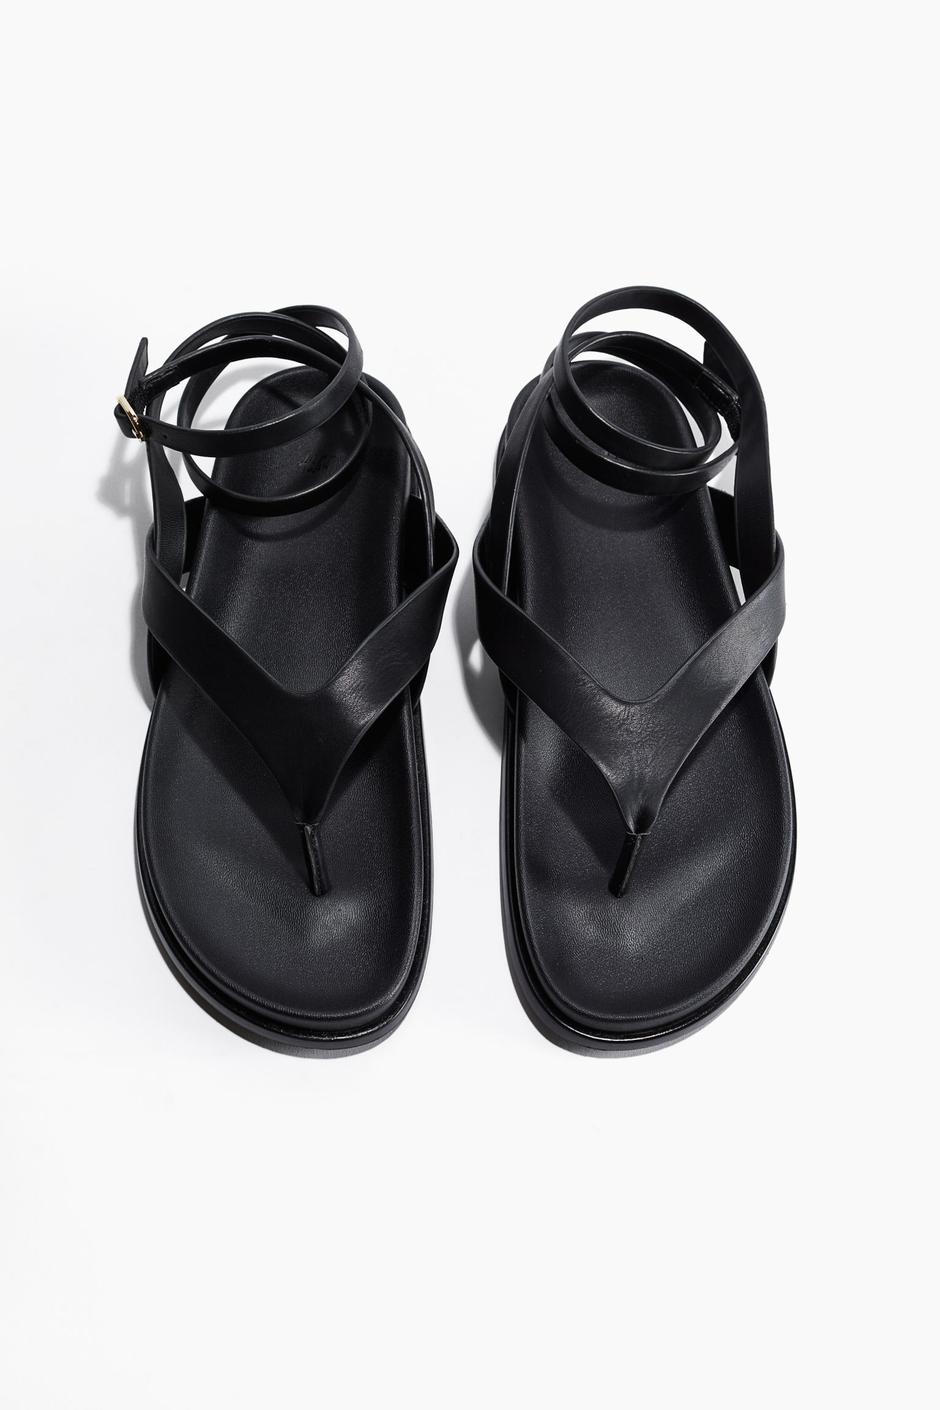 Foto: H&M, gladijatorske sandale (24,99 eura) | Autor: 